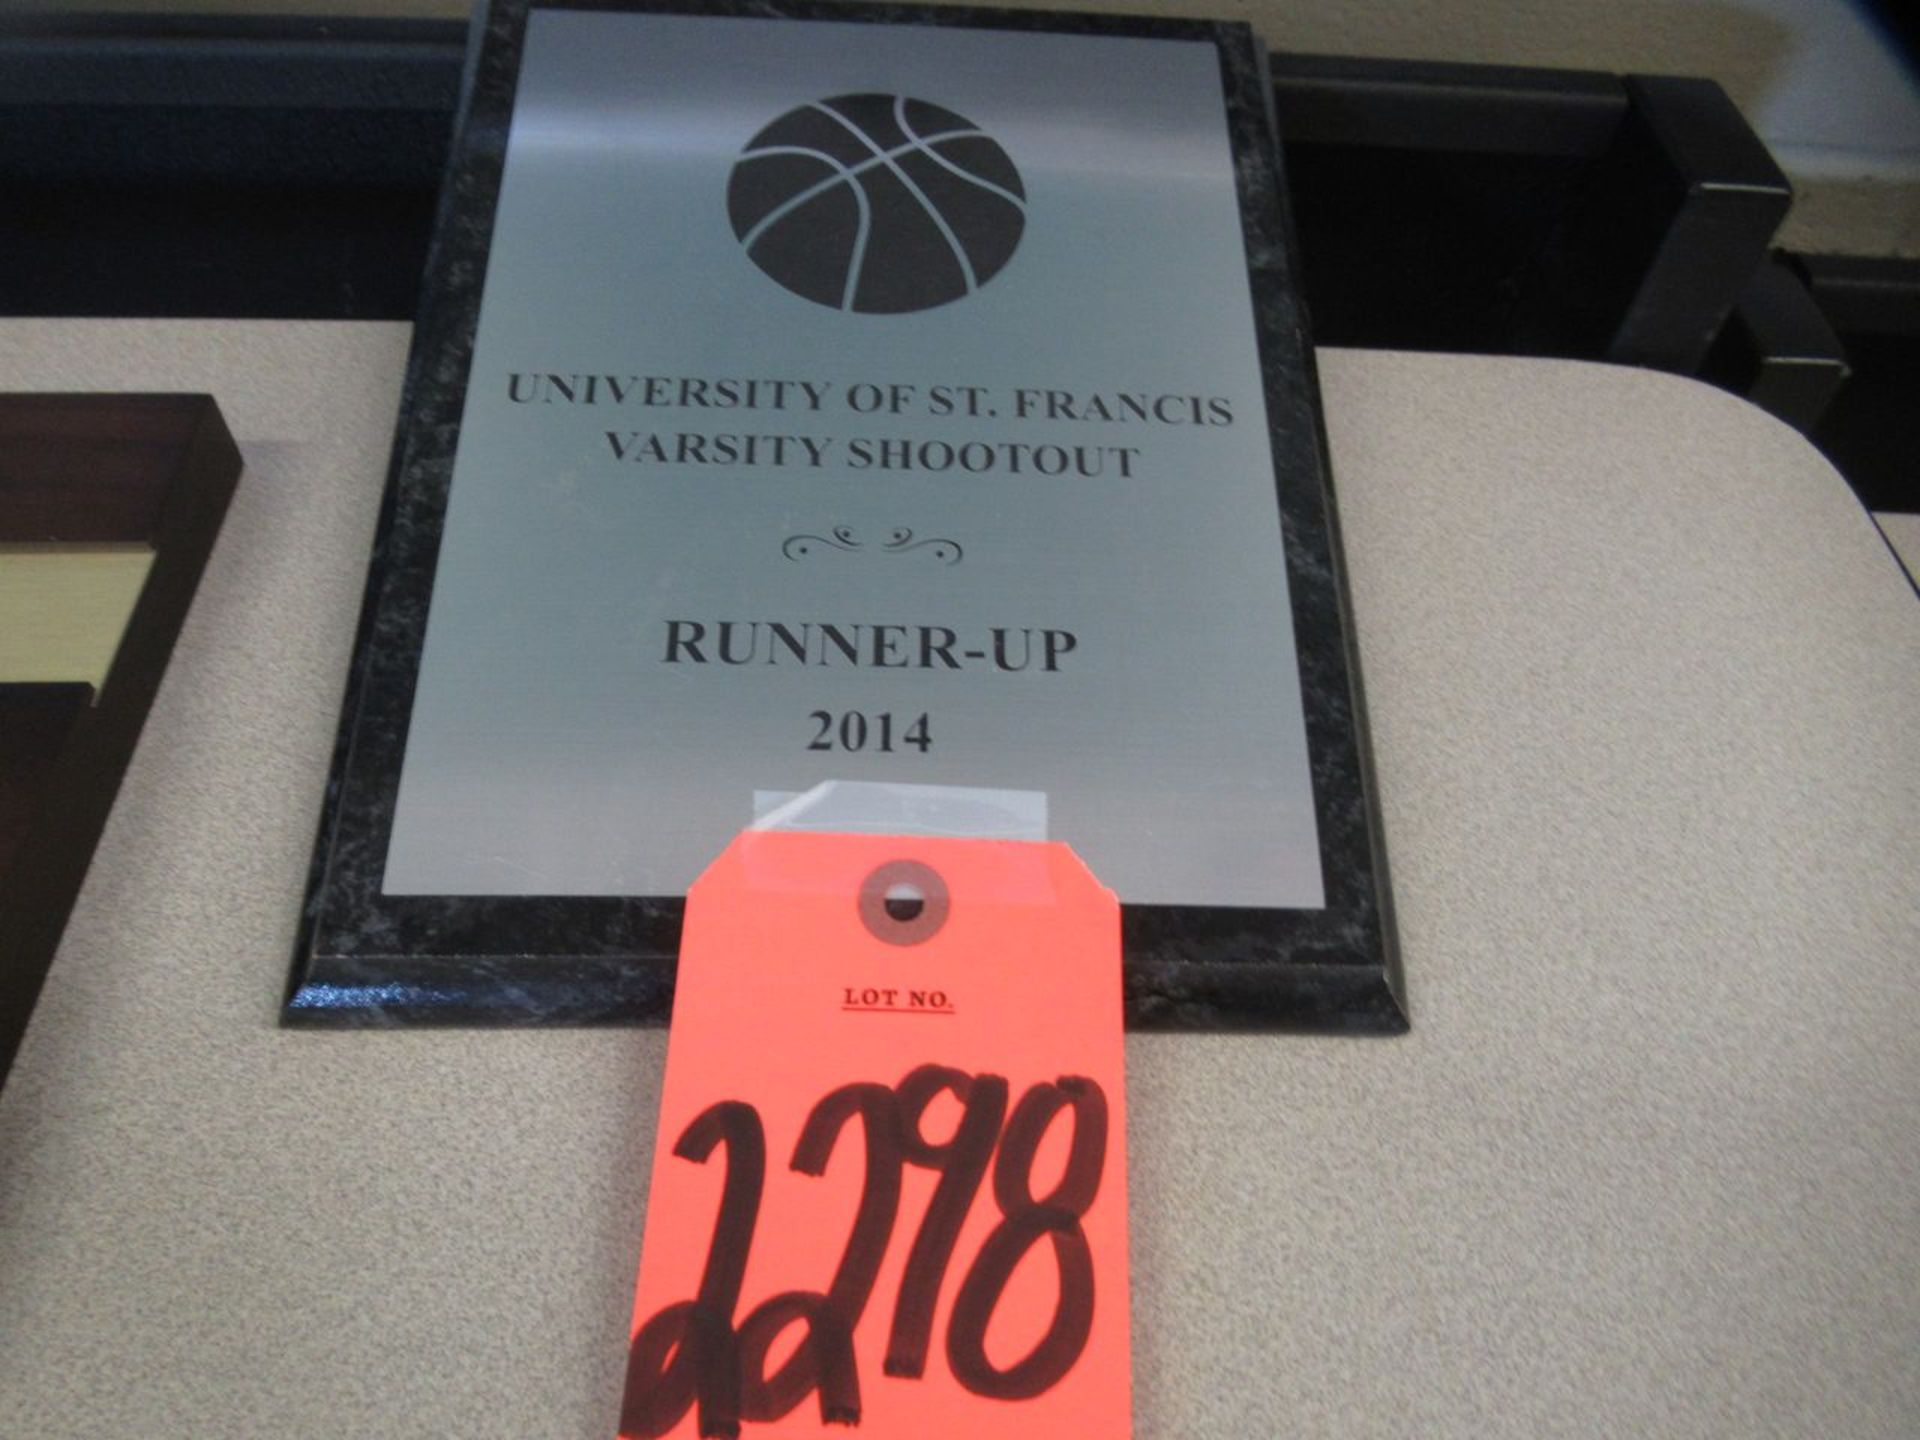 2014 University of St Francis Varsity Shootout Runner Up Plaque (Room 303)